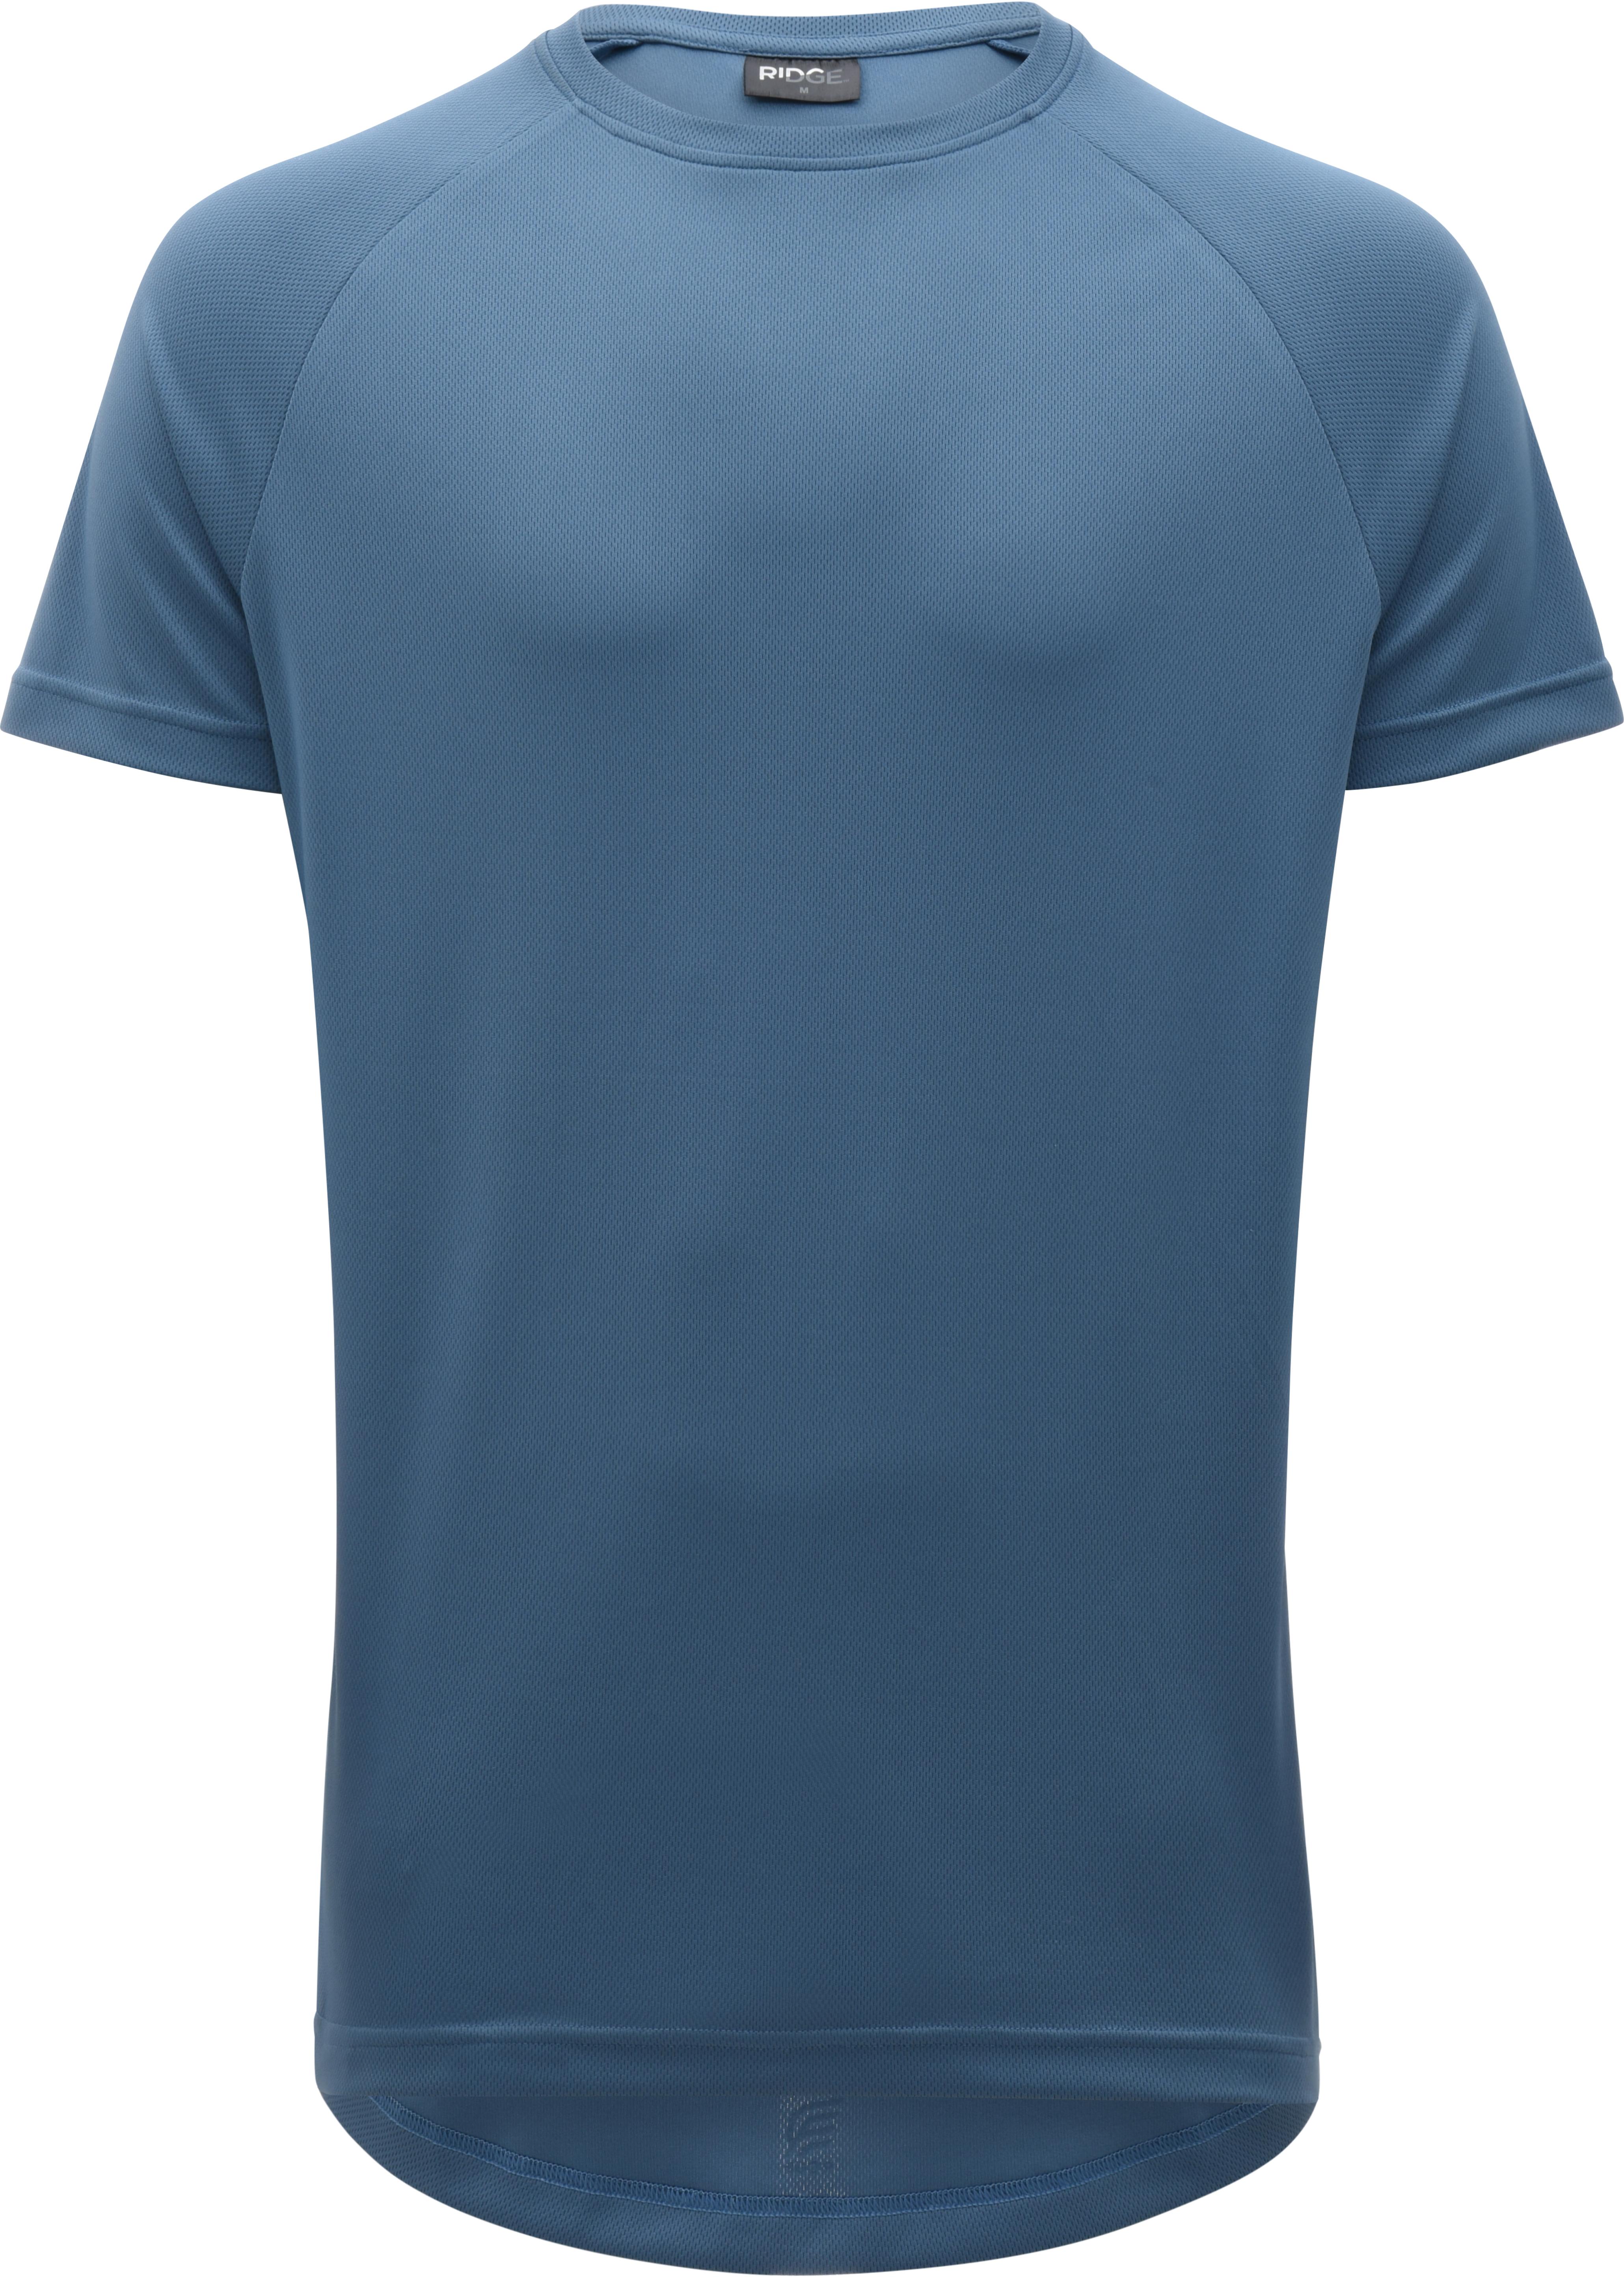 Ridge Mens Cycling T Shirt - Blue Stone Large